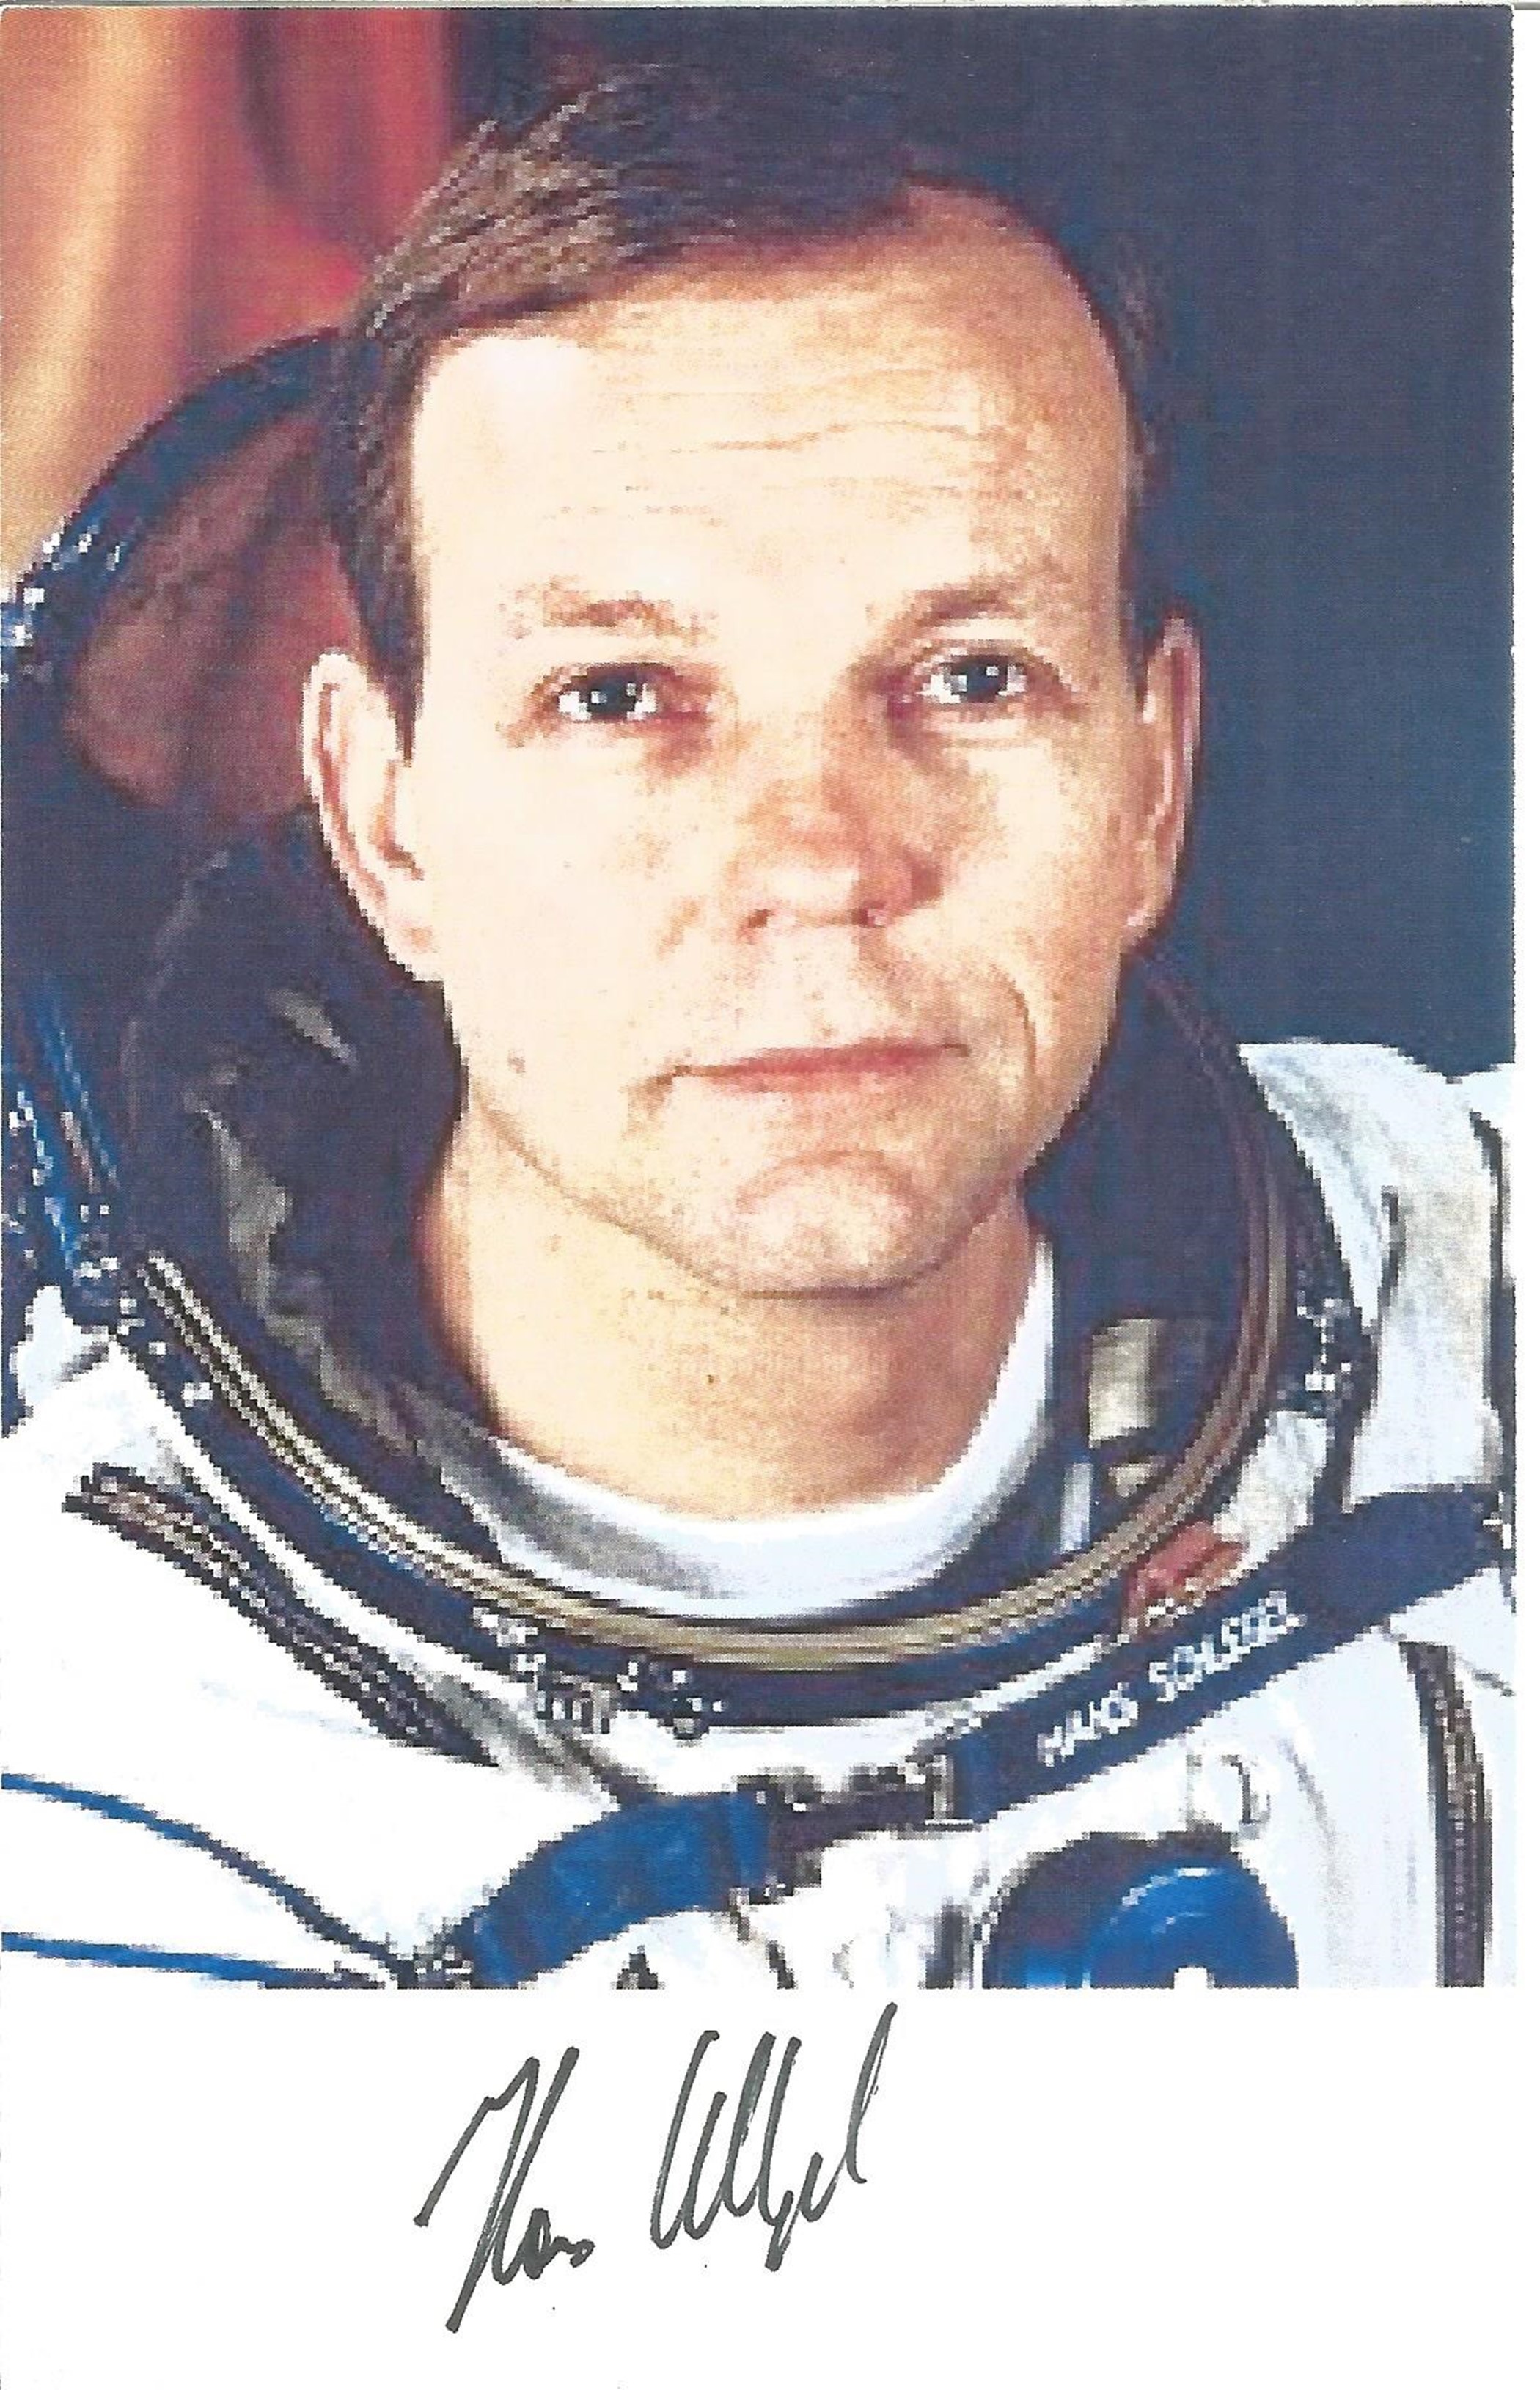 Hans Schlegel Soyuz Cosmonaut signed 6 x 4 colour photo. Good condition. All autographs come with